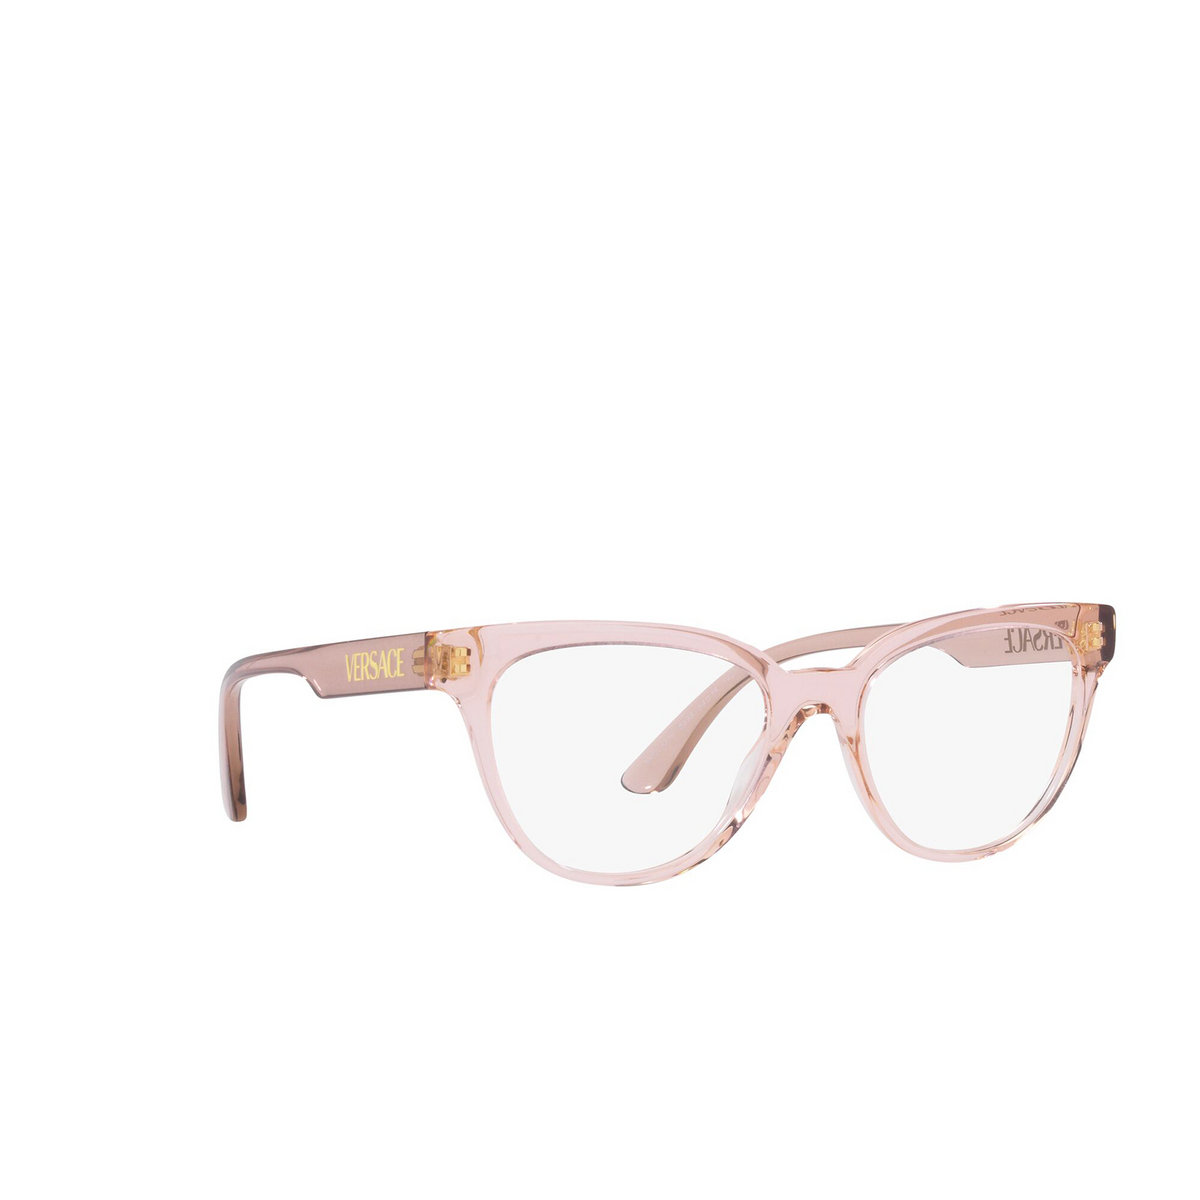 Versace VE3315 Eyeglasses 5339 Transparent Pink - three-quarters view